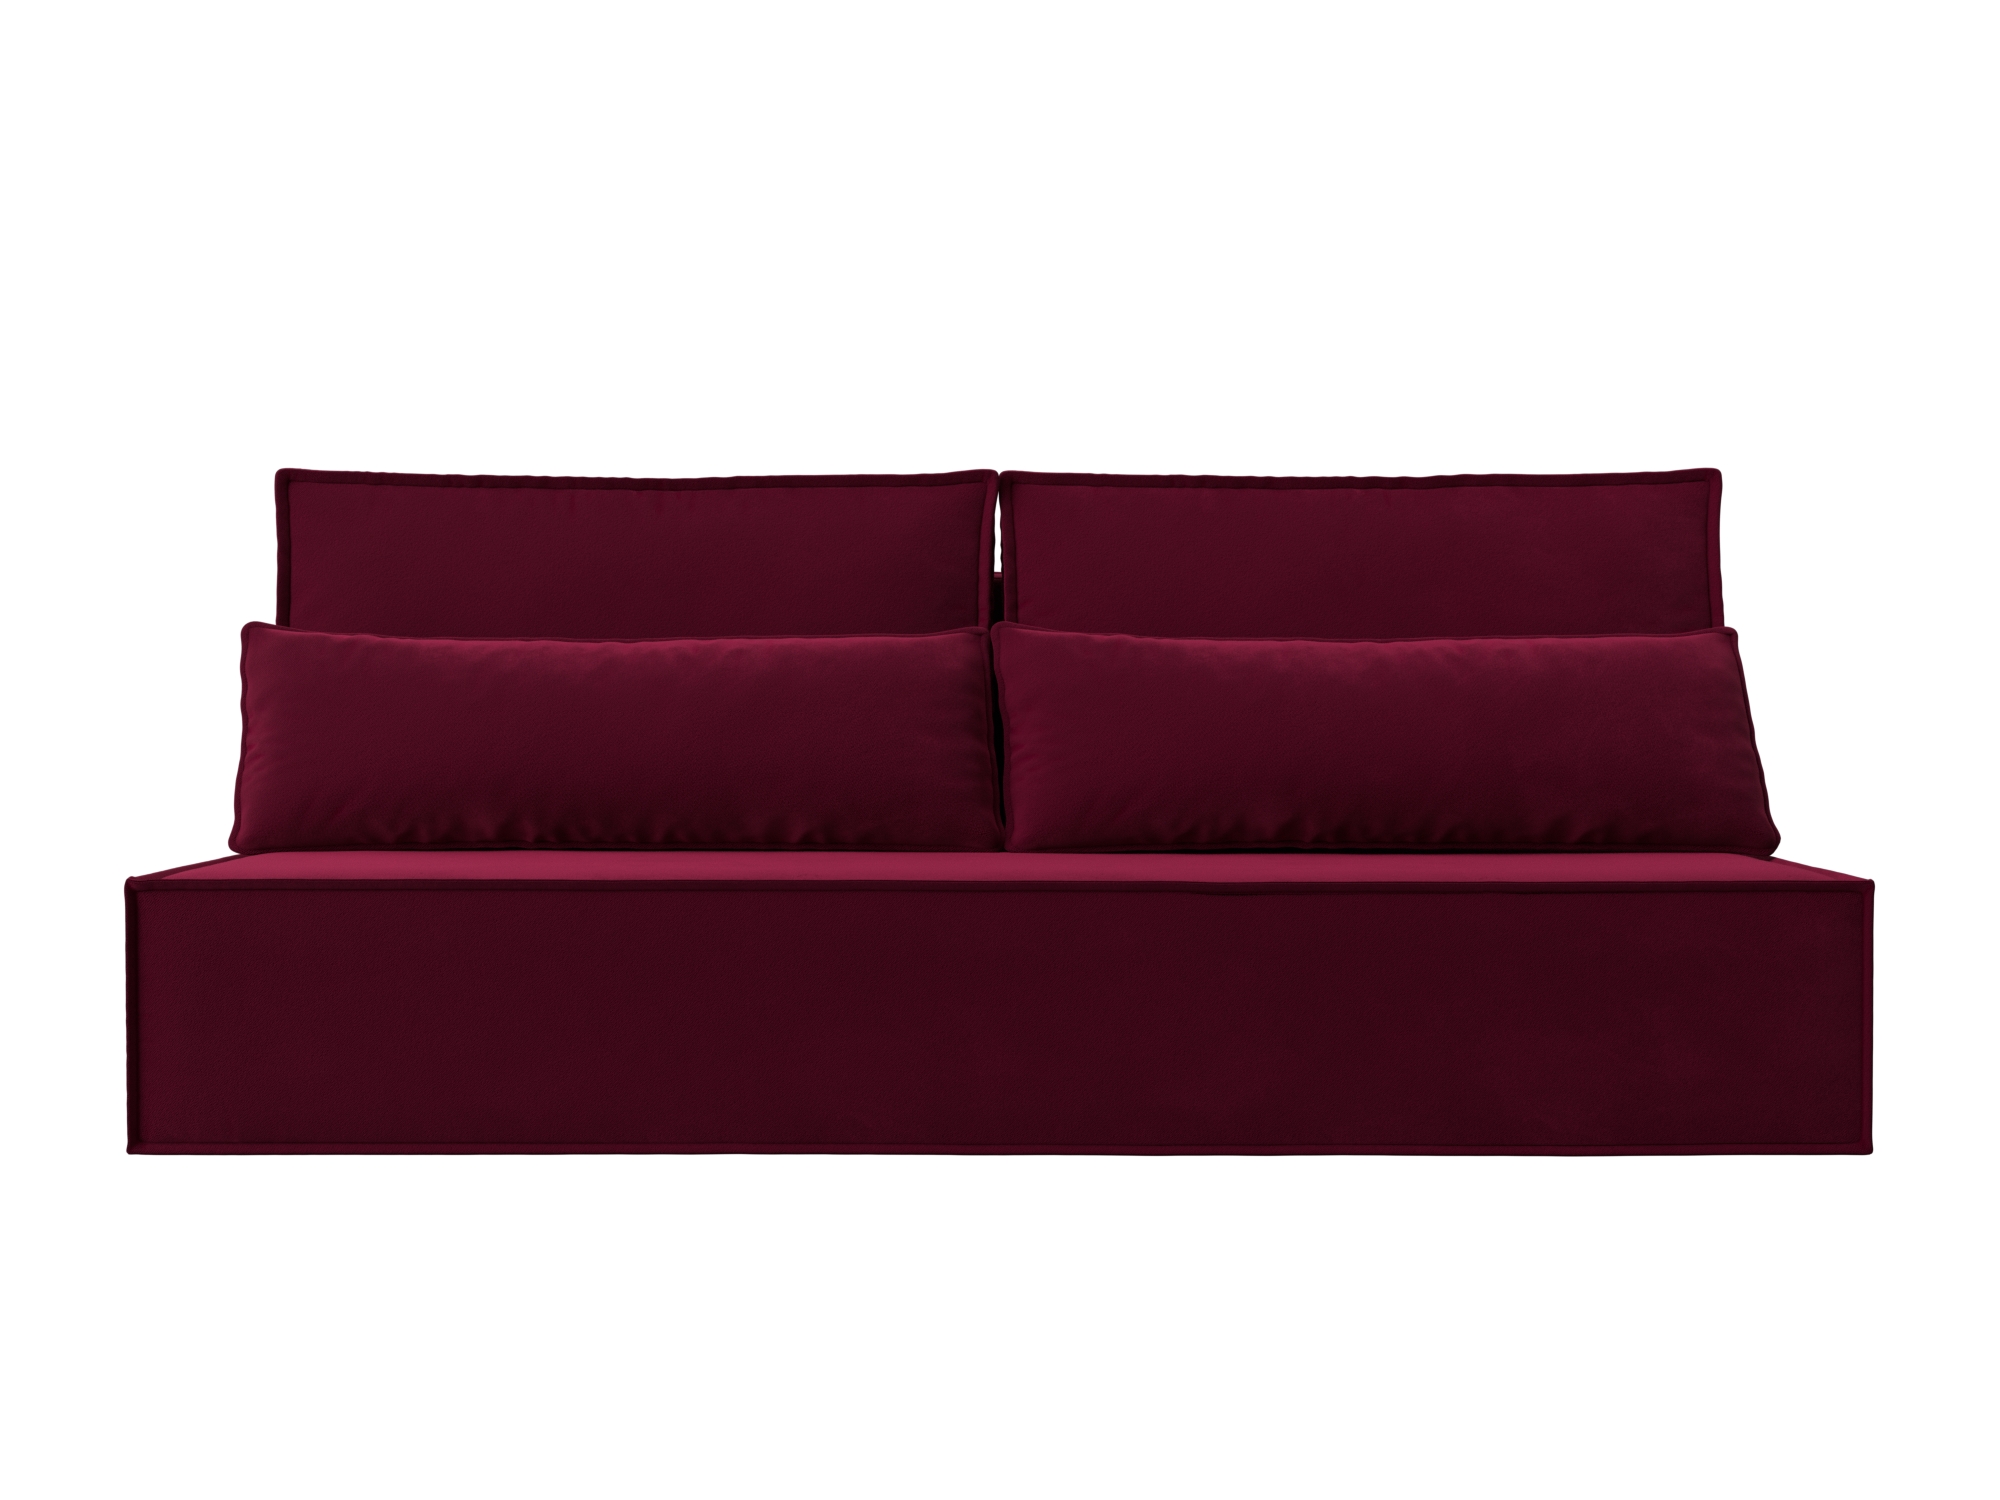 Диван Фабио MebelVia Красный, Микровельвет, ЛДСП, Брус диван еврокнижка мебелико ник 2 микровельвет красный